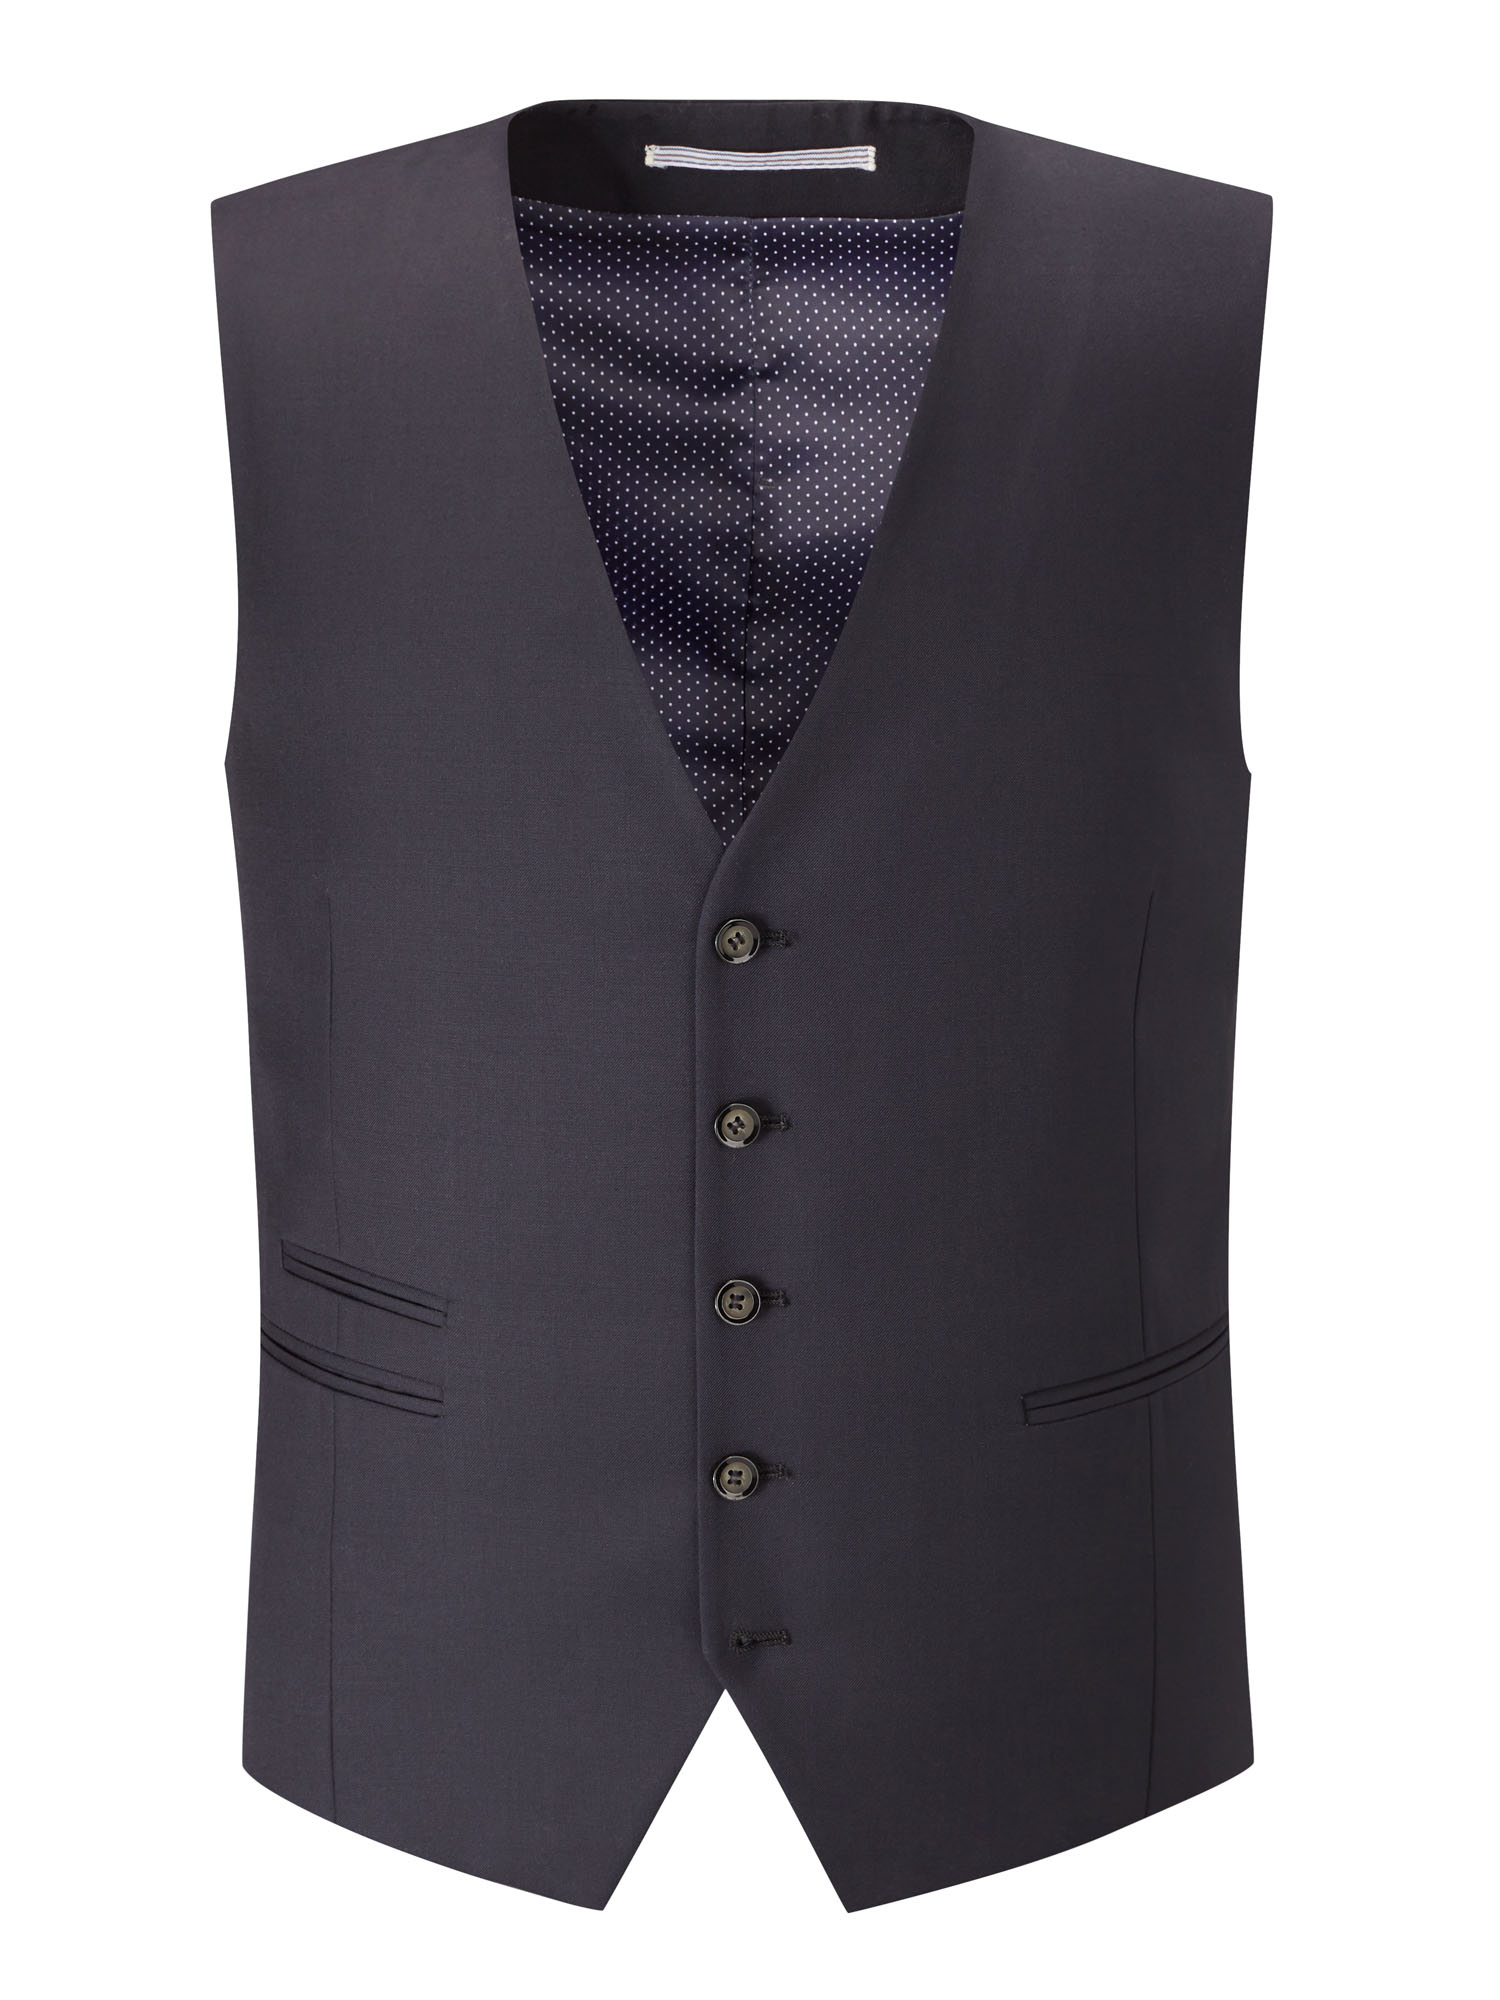 Joss Navy 3 Piece Suit - Tom Murphy's Formal and Menswear